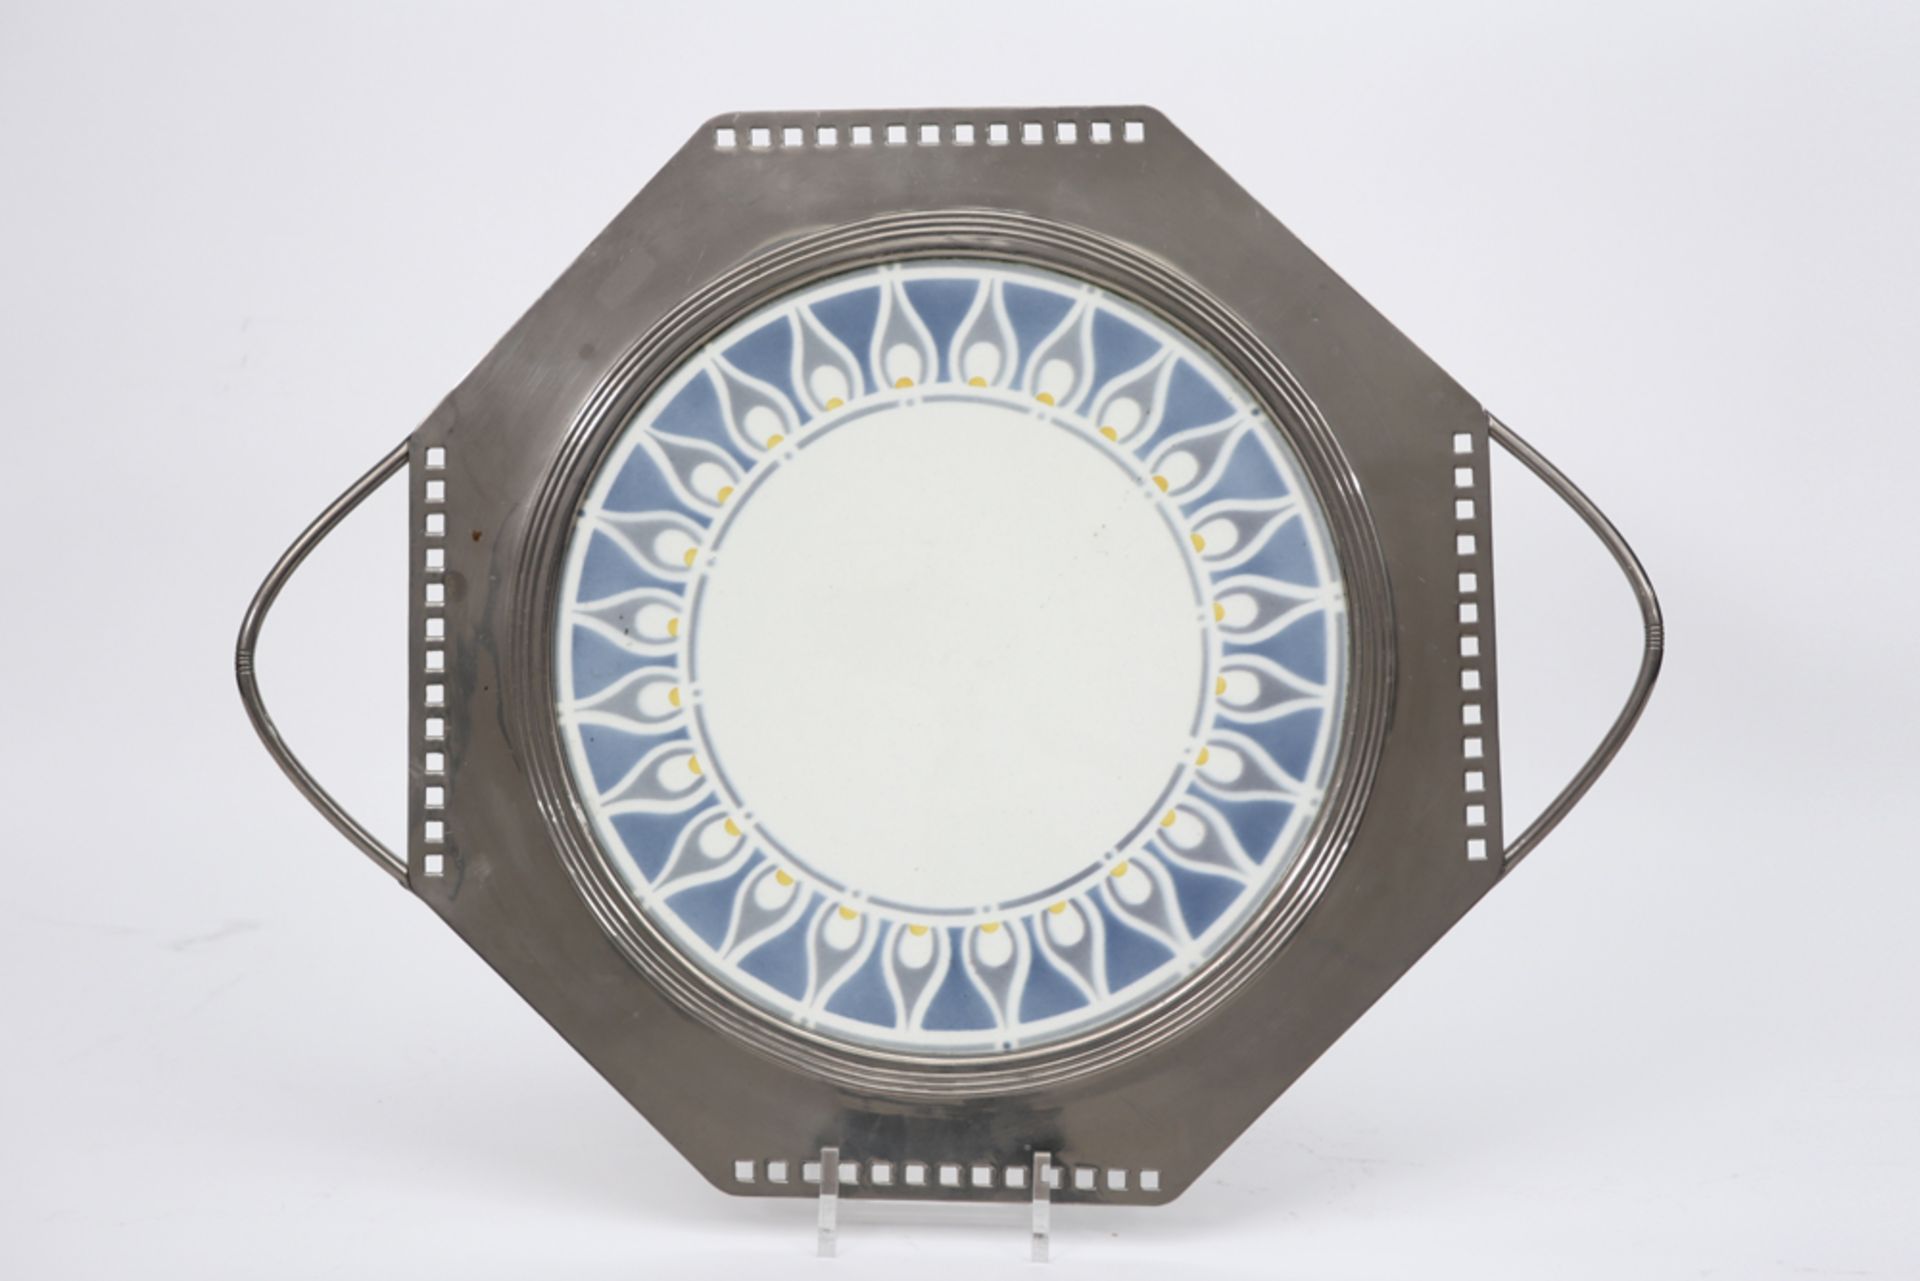 Jugenstil serving tray with plate in marked ceramic with a pewter mounting || Jugendstil-schaal